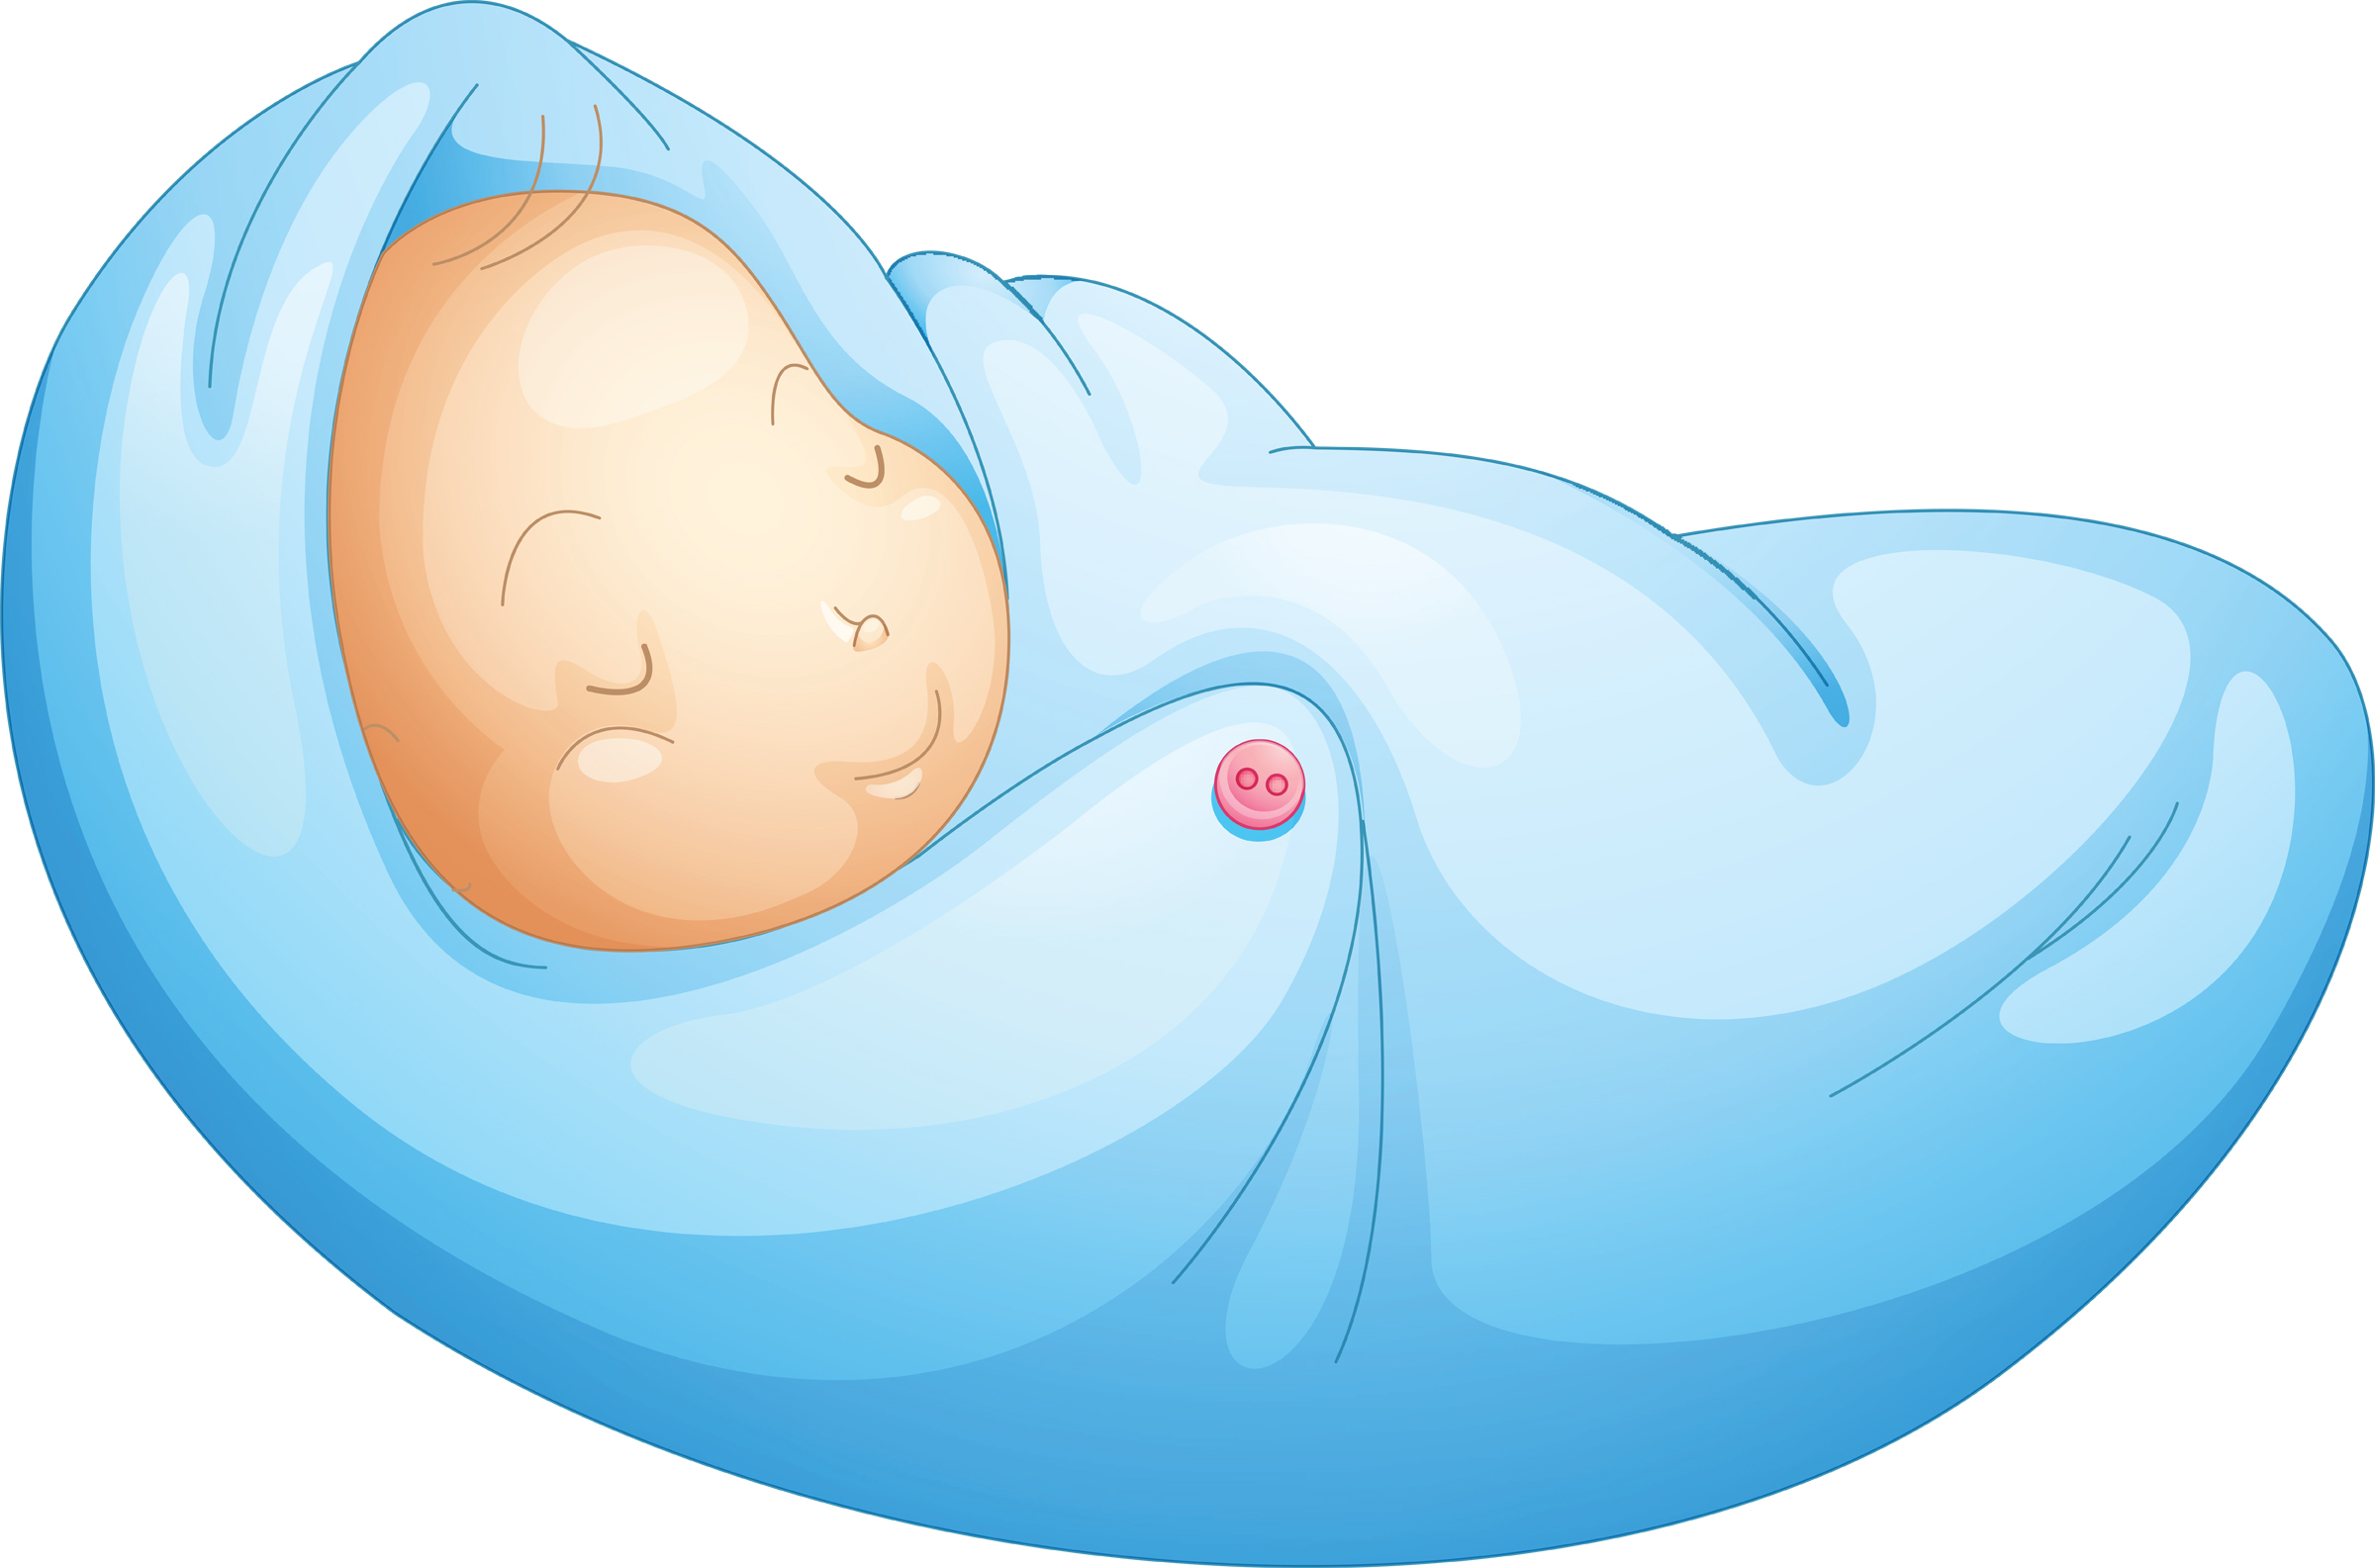 Clipart newborn baby boy - ClipartFox